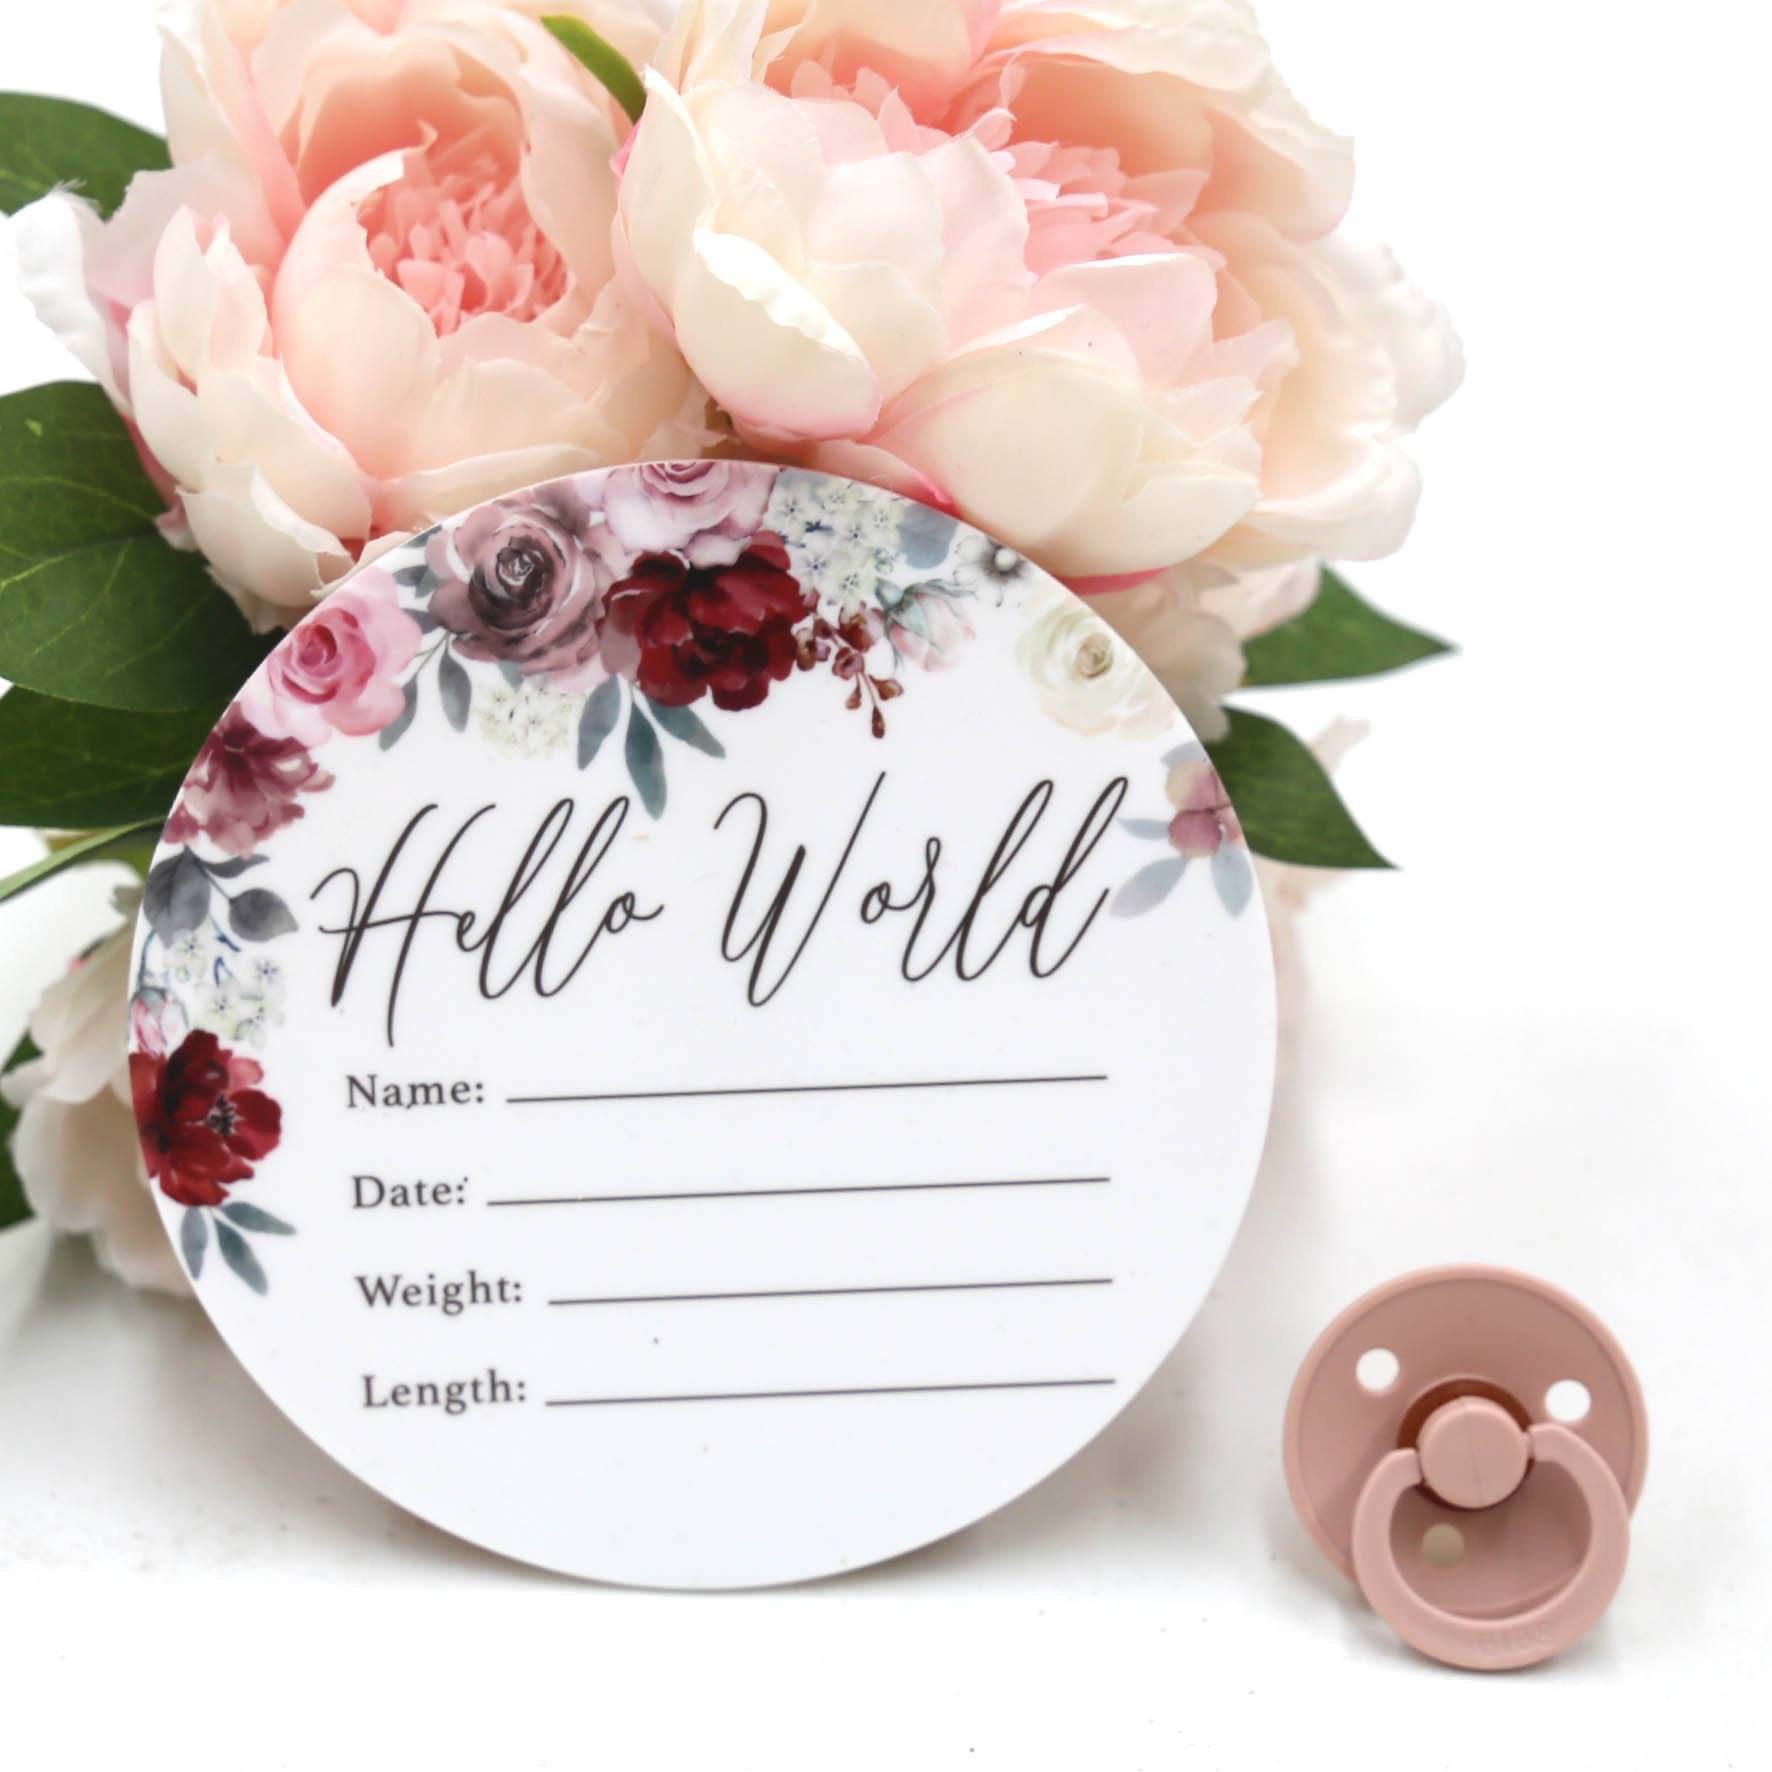 Birth Announcement Card- Hello World Pink, Mauve, Cream, Red Floral